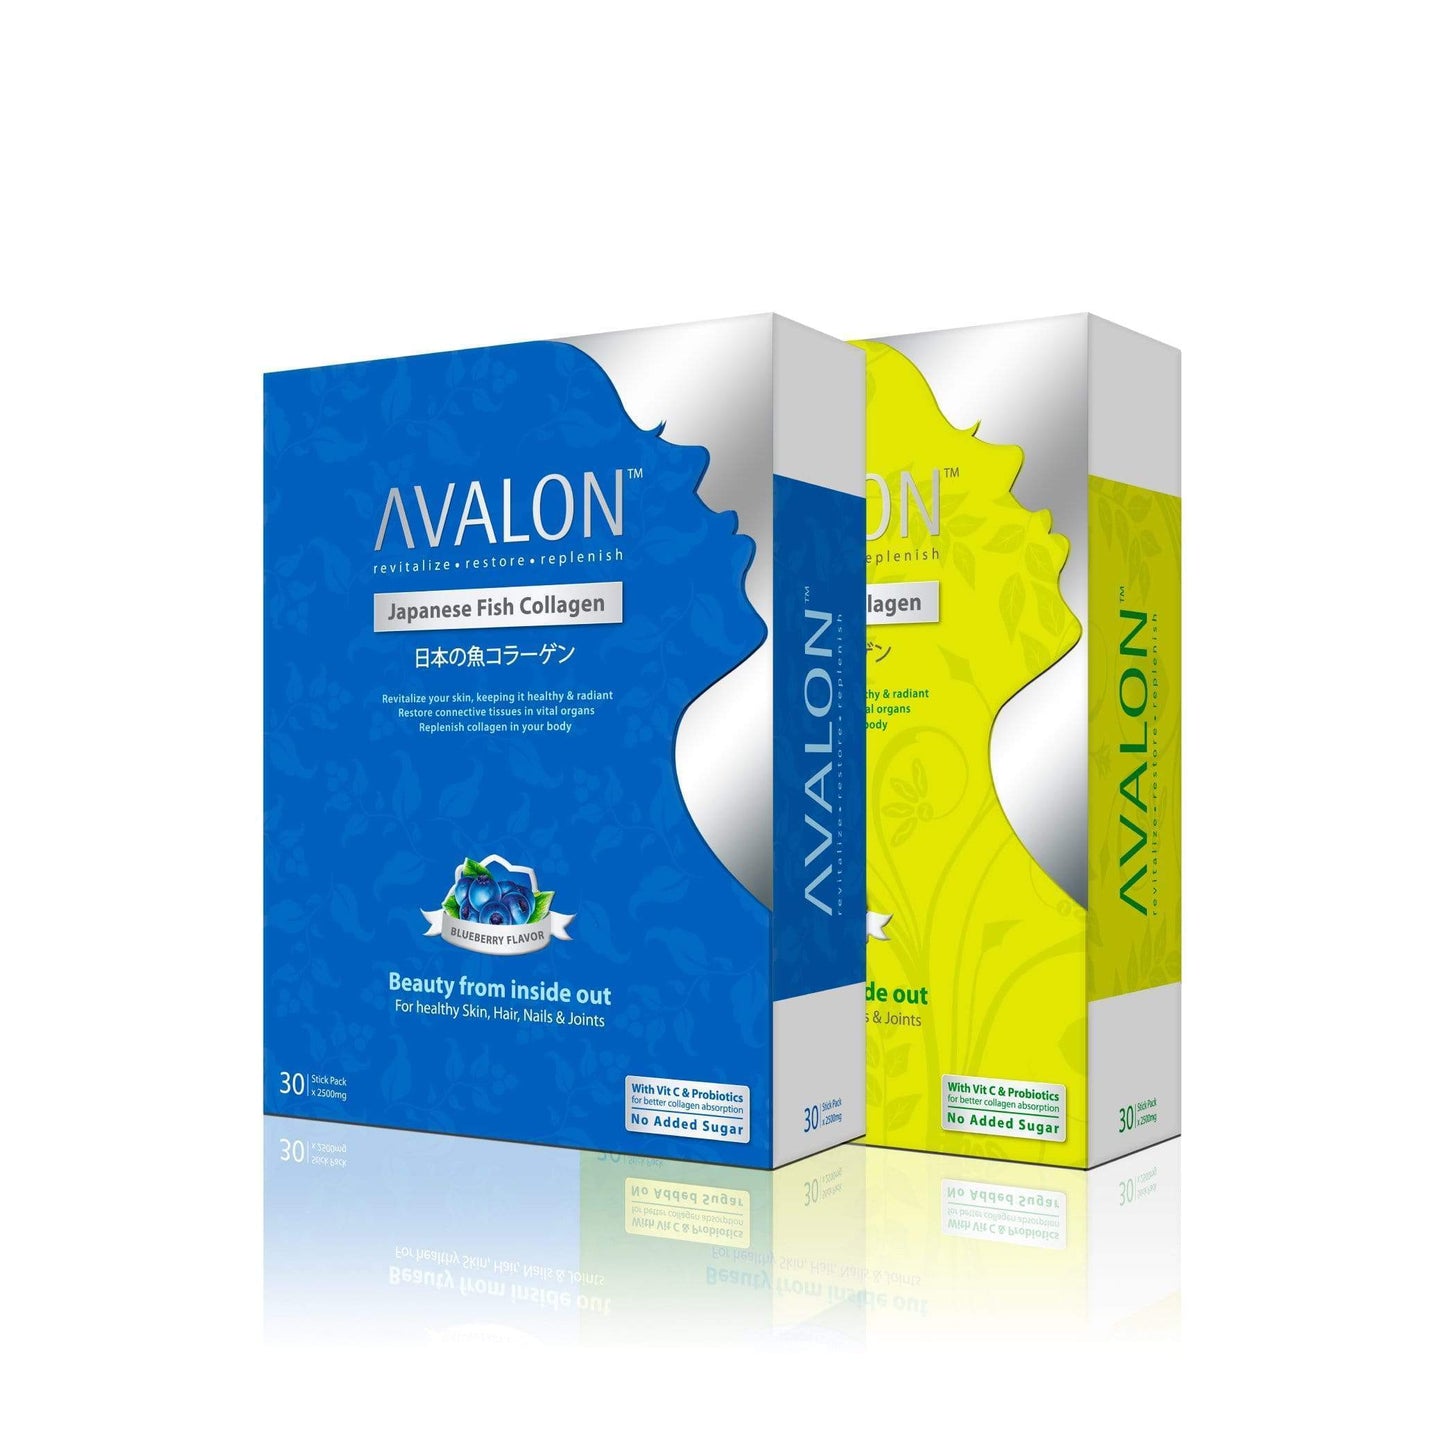 Avalon Japanese Fish Collagen - Avalon Health & Beauty